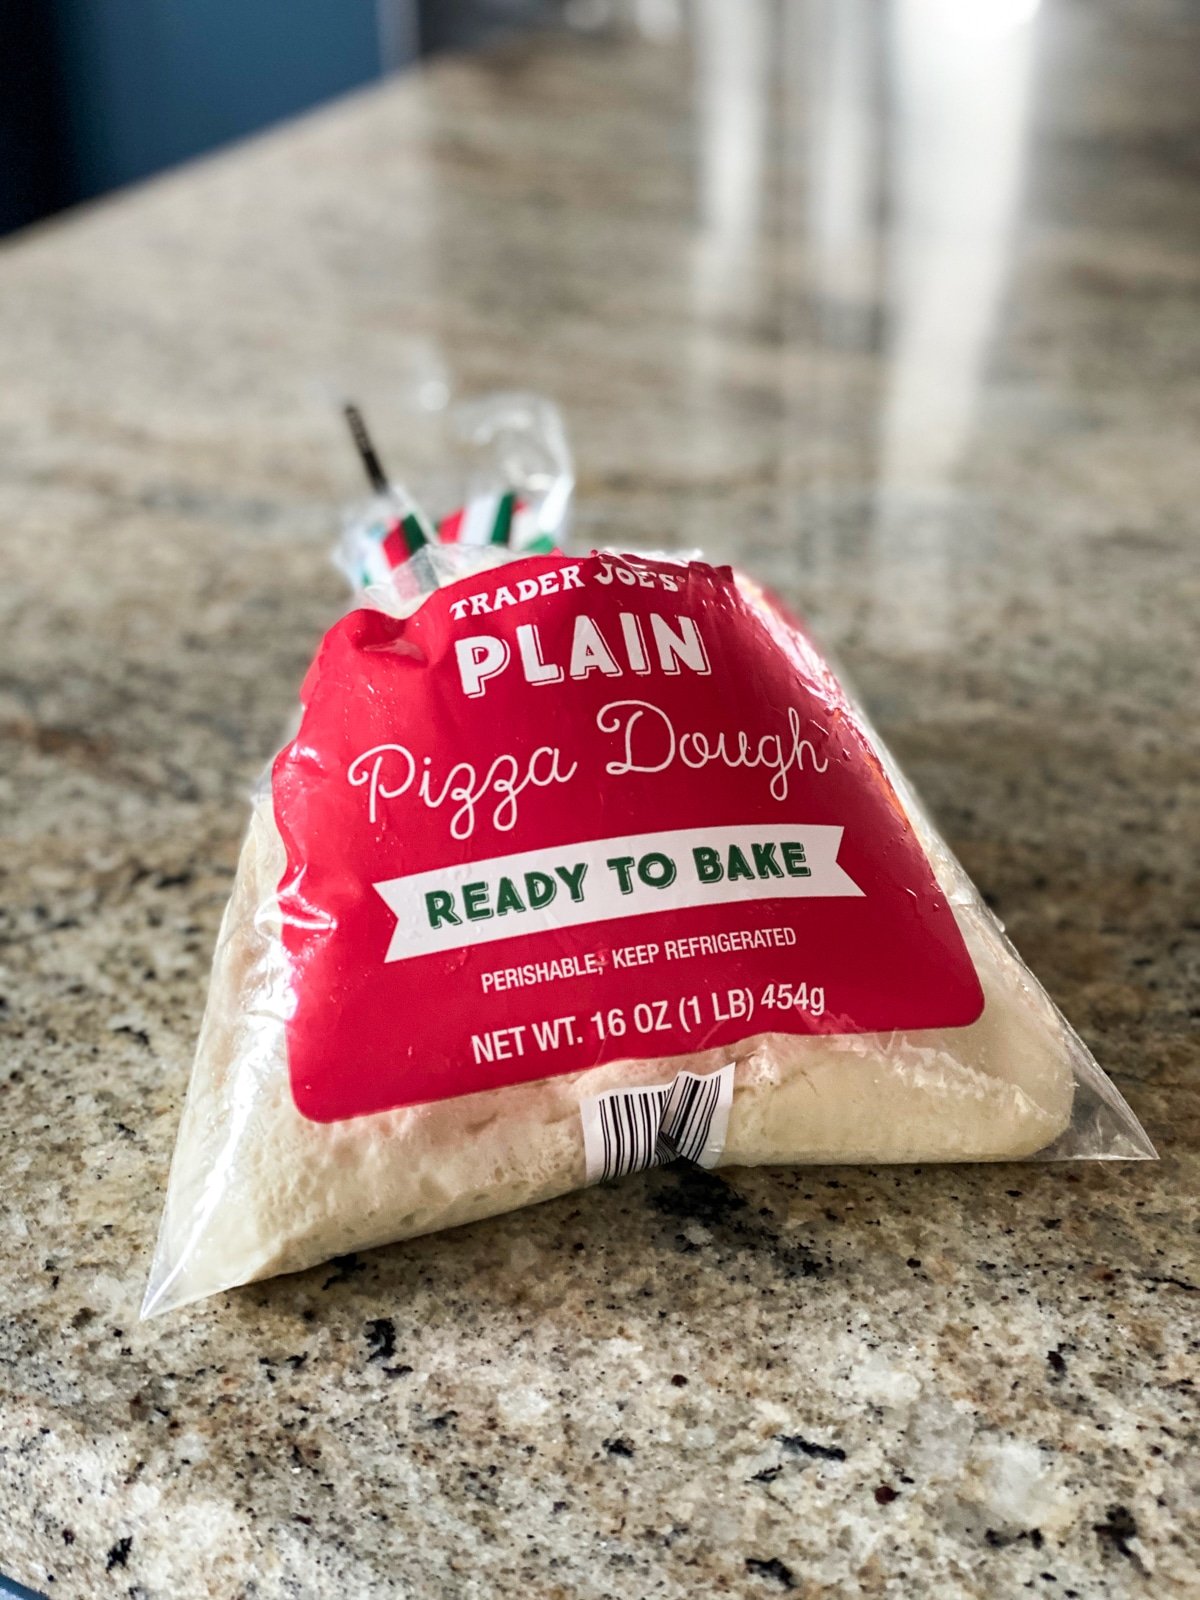 bag of trader joe's plain pizza dough